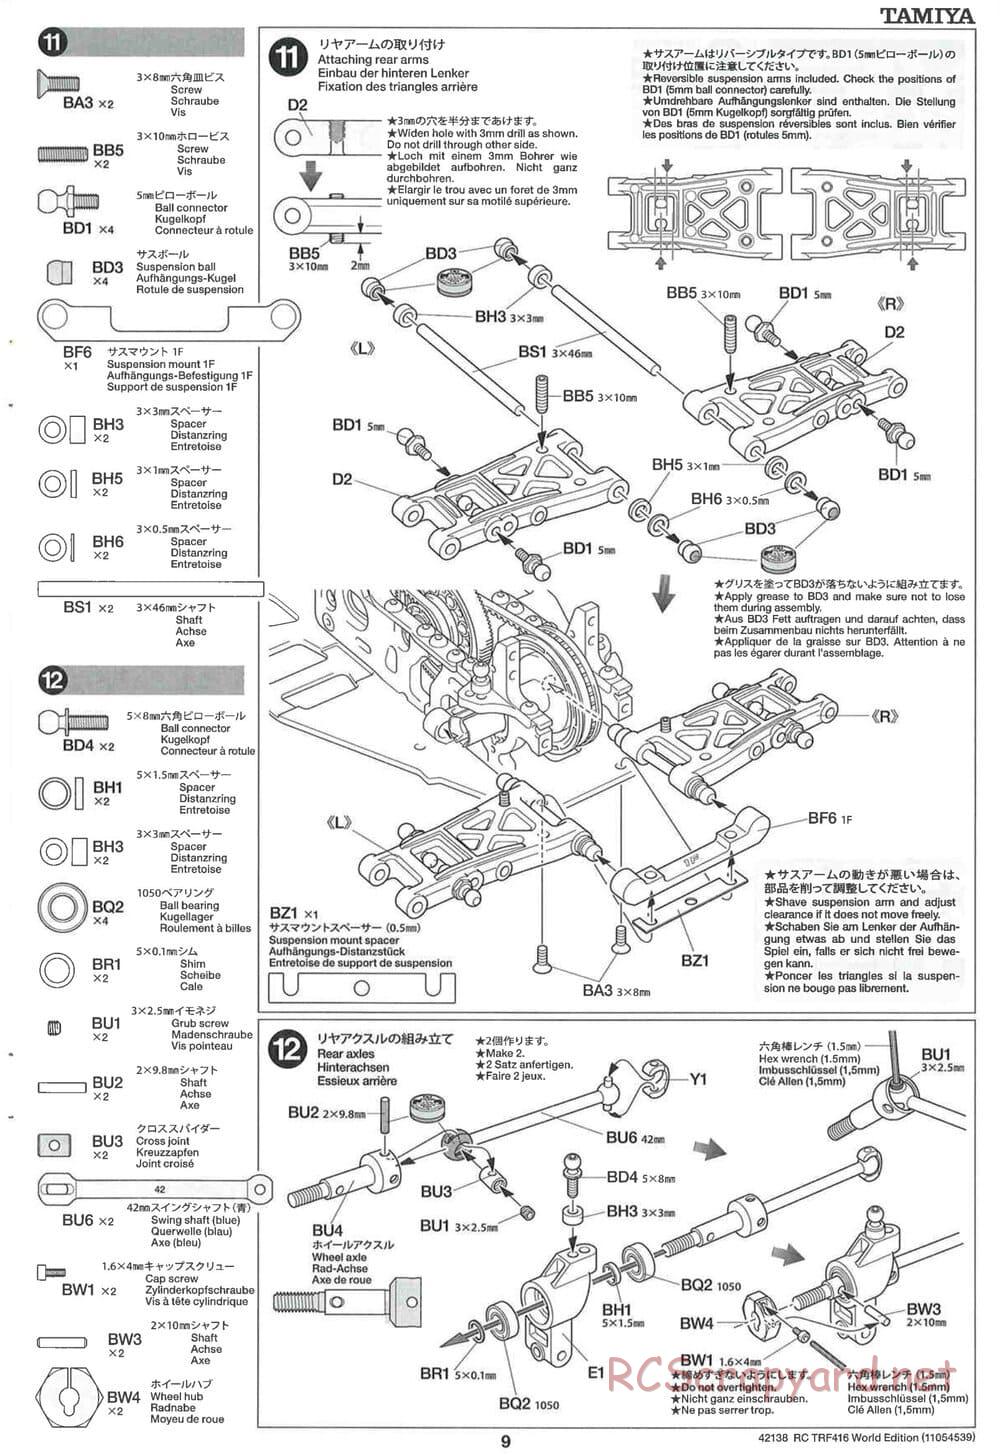 Tamiya - TRF416 World Edition Chassis - Manual - Page 9